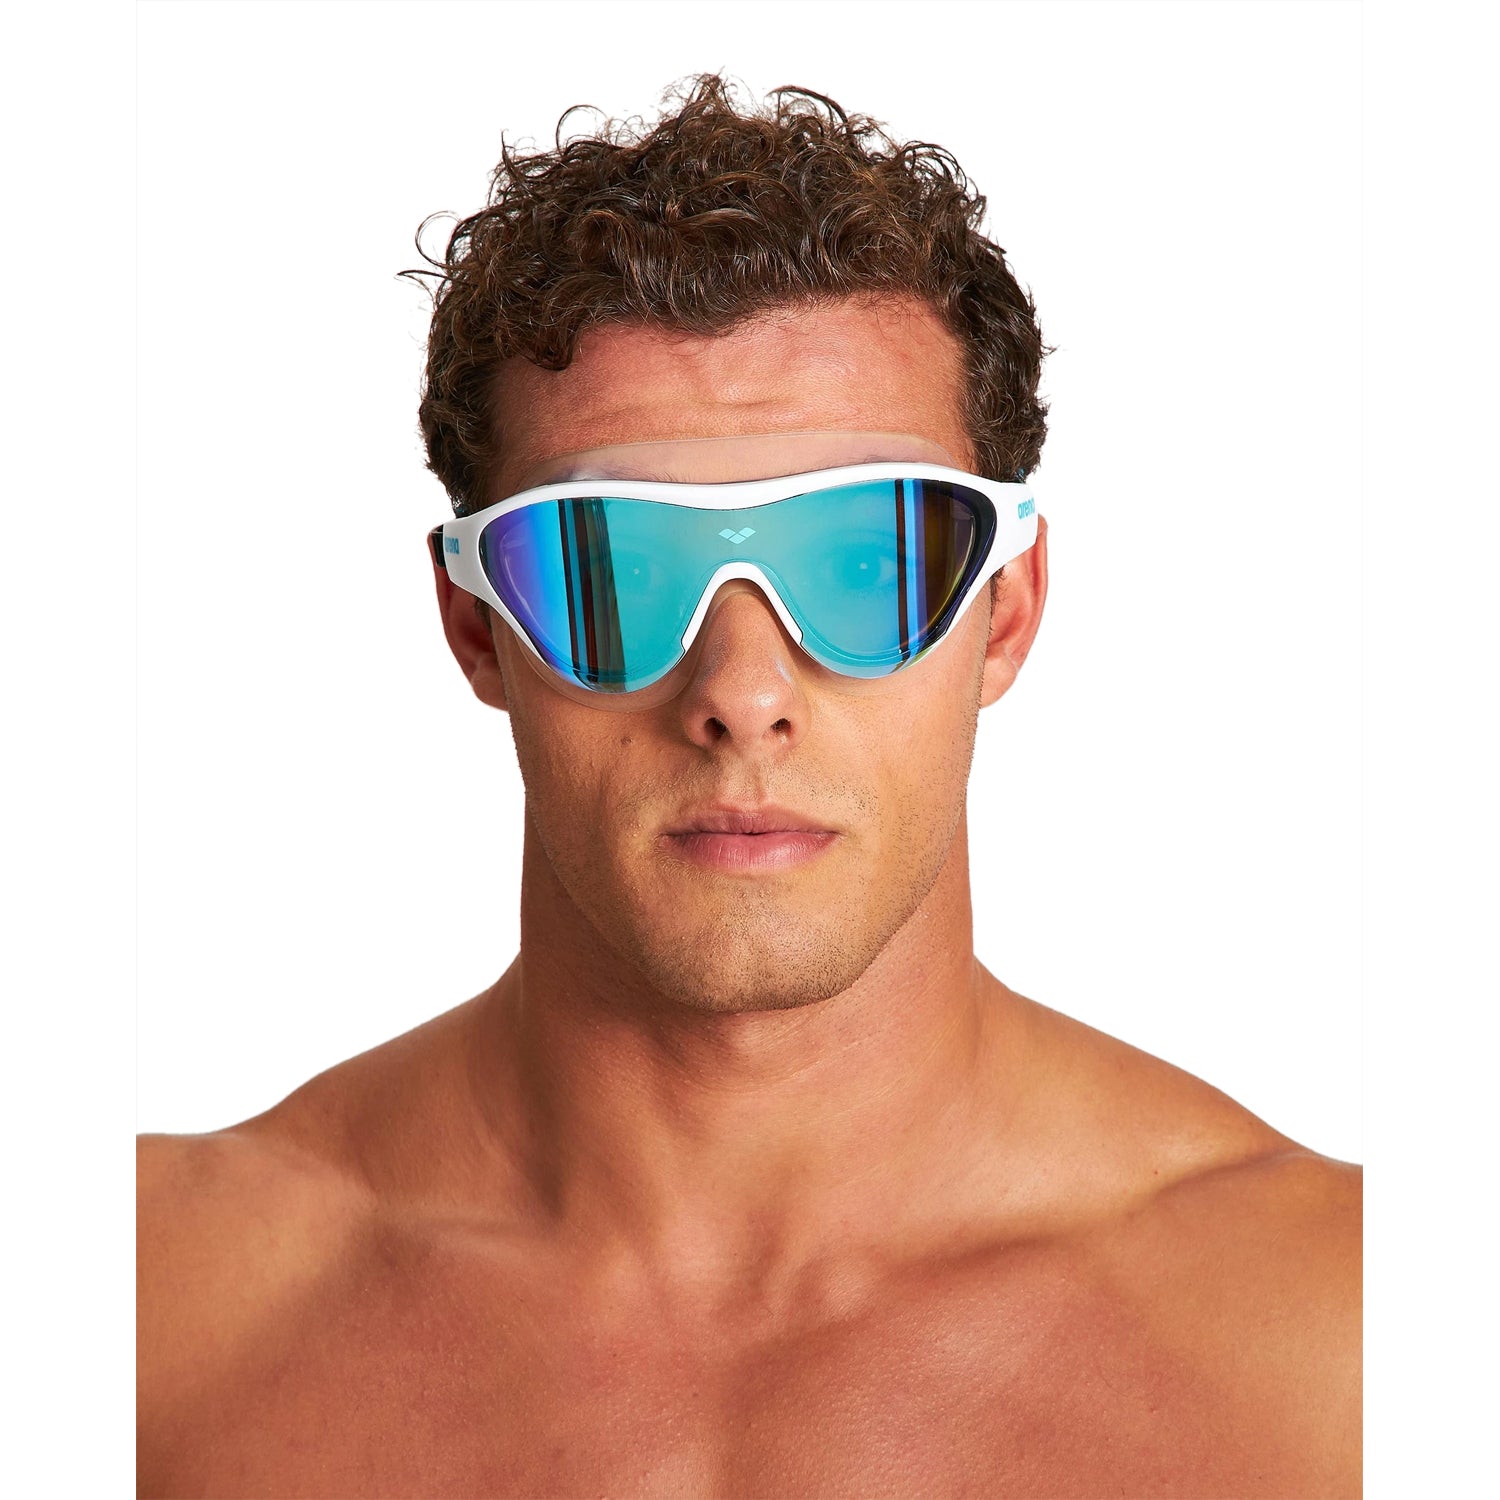 Arena The One Mask Mirror Swim Goggles, Blue/White/Black - Adult - Best Price online Prokicksports.com